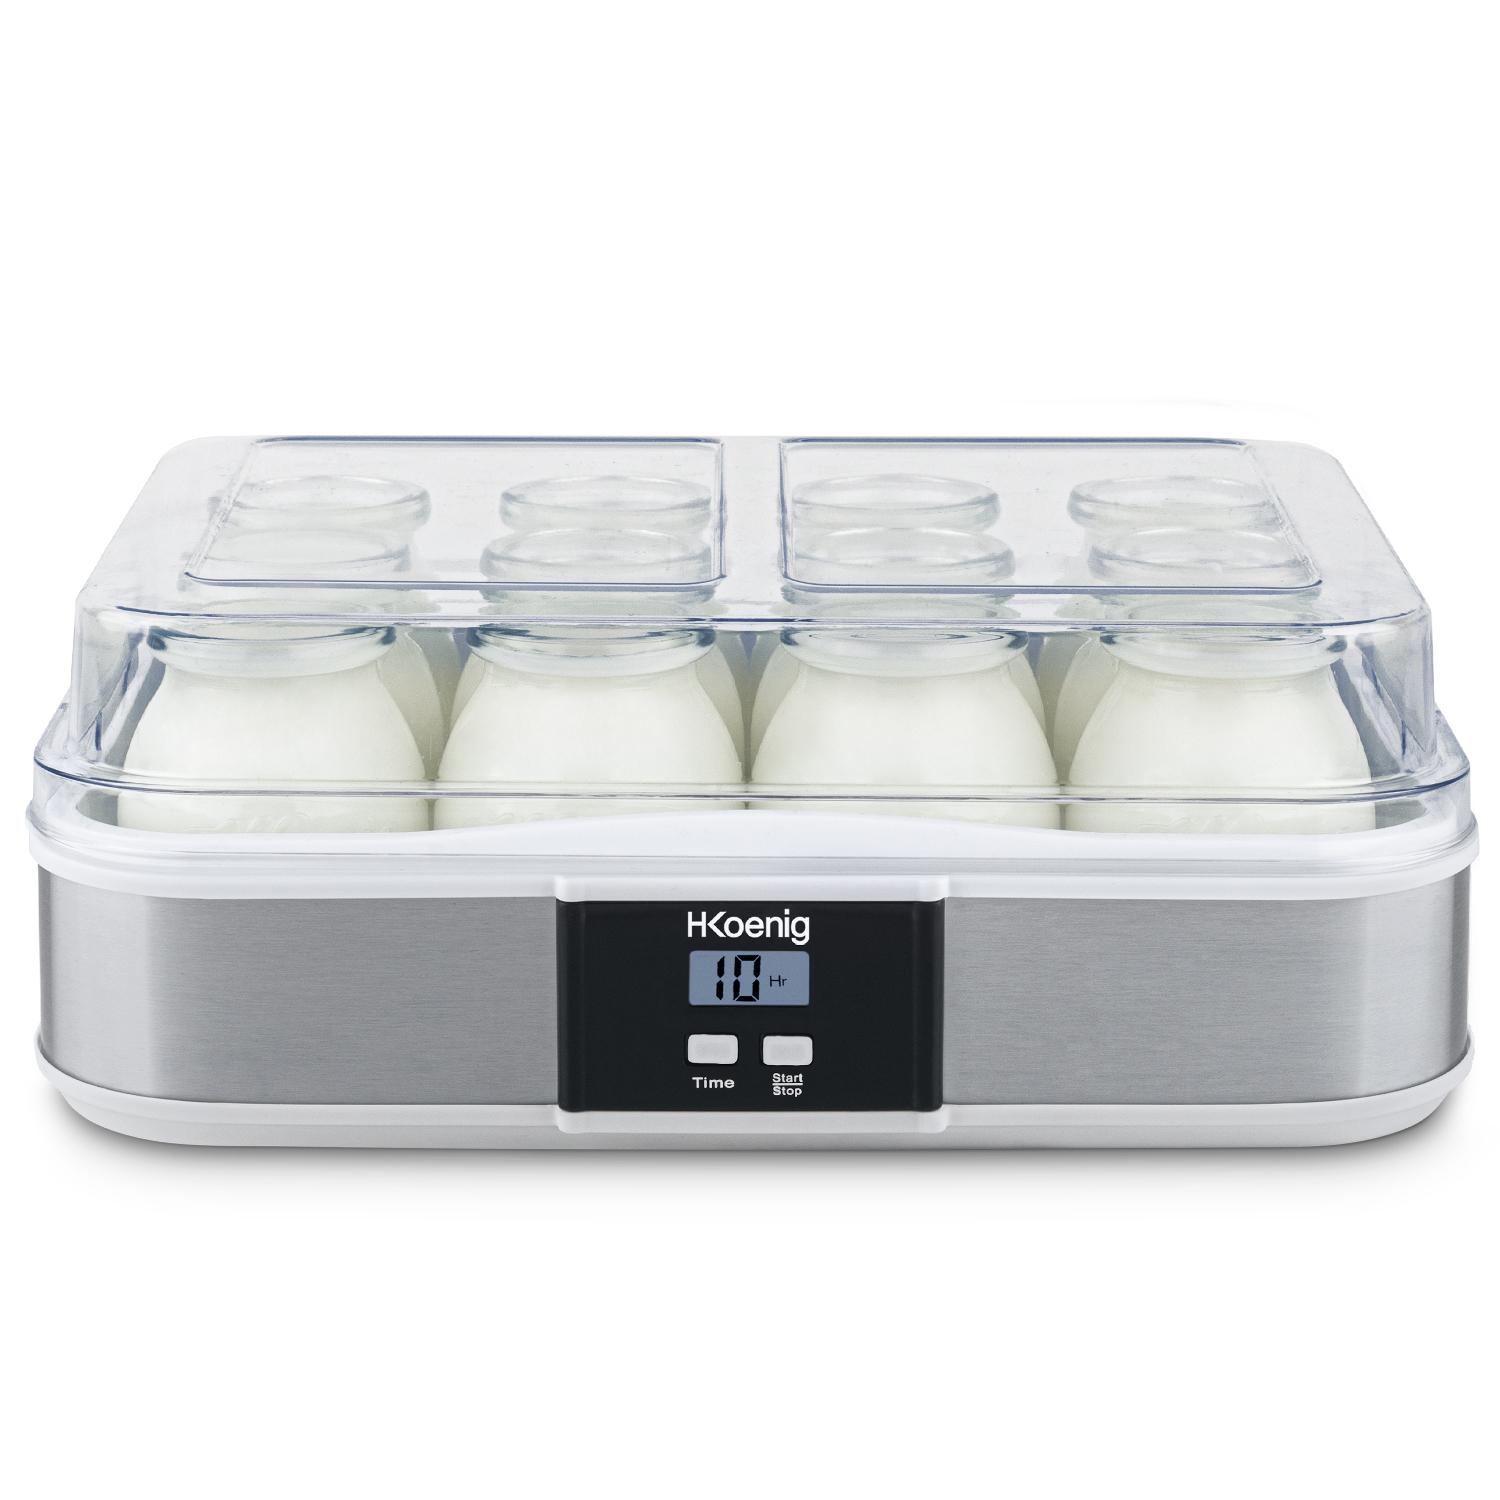 H.Koenig 12 pots yoghurt maker ELY120